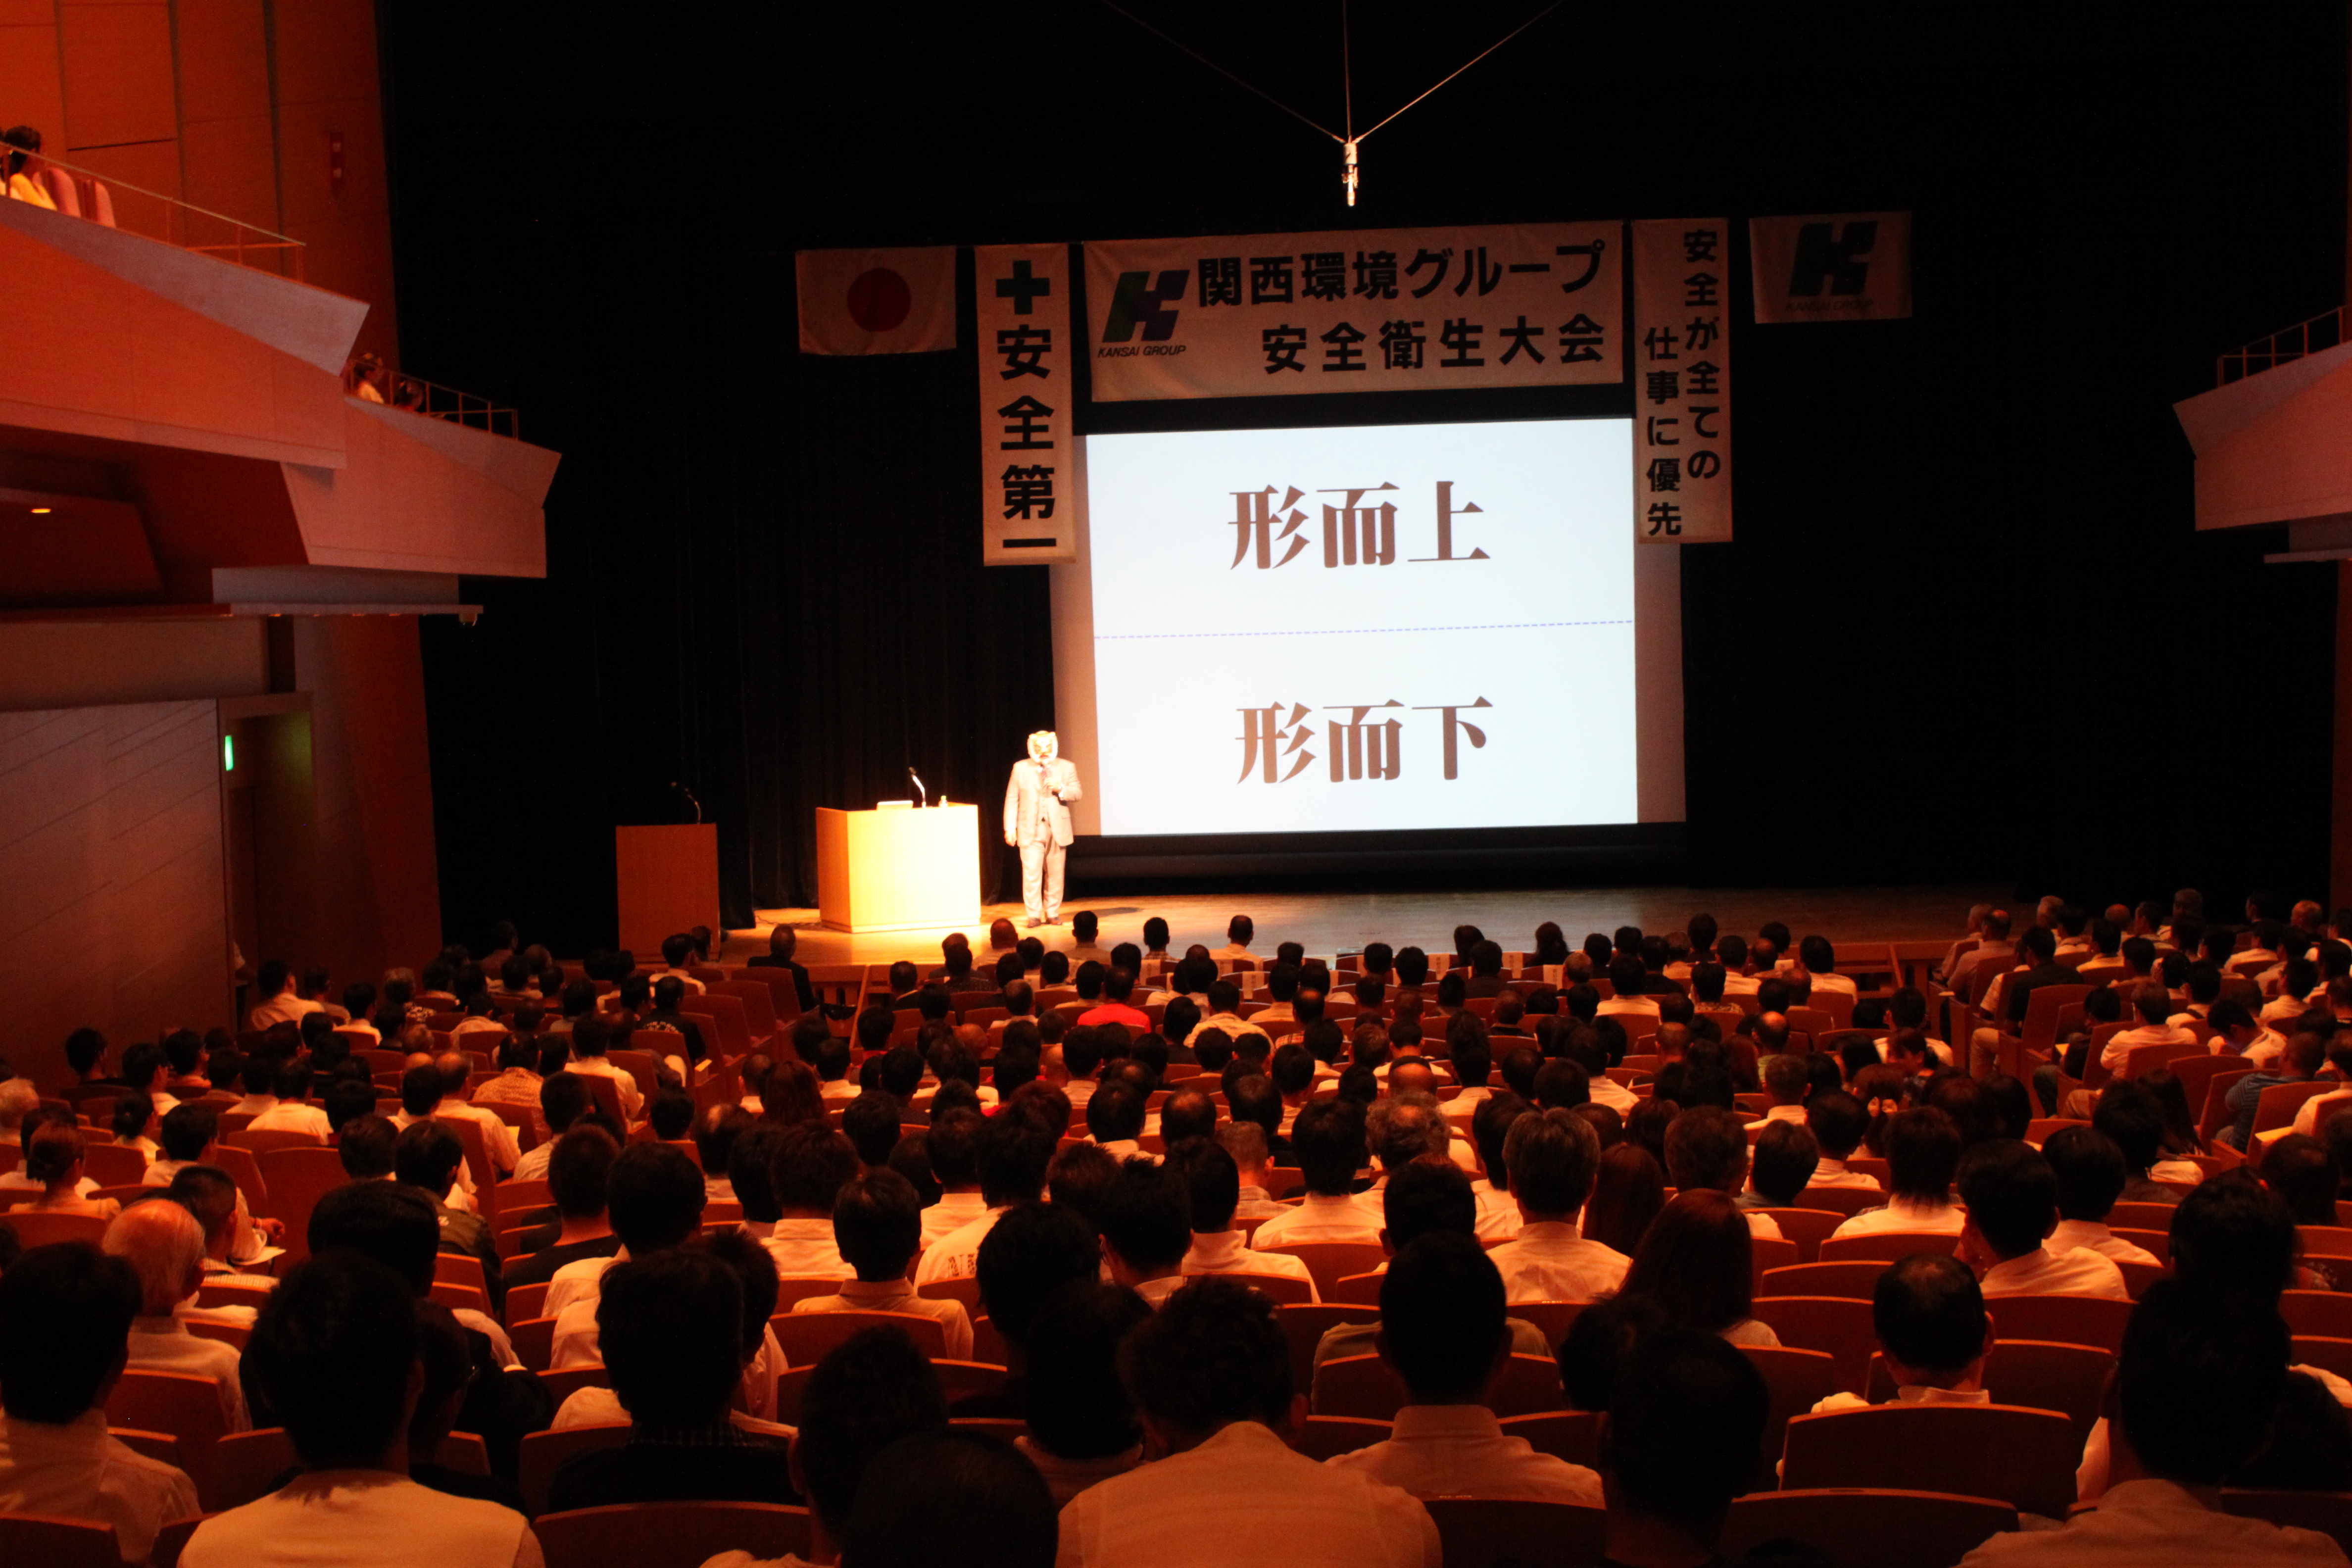 http://kansaikankyo-group.co.jp/news/group/release/2013/09/02/20130901_0559.JPG